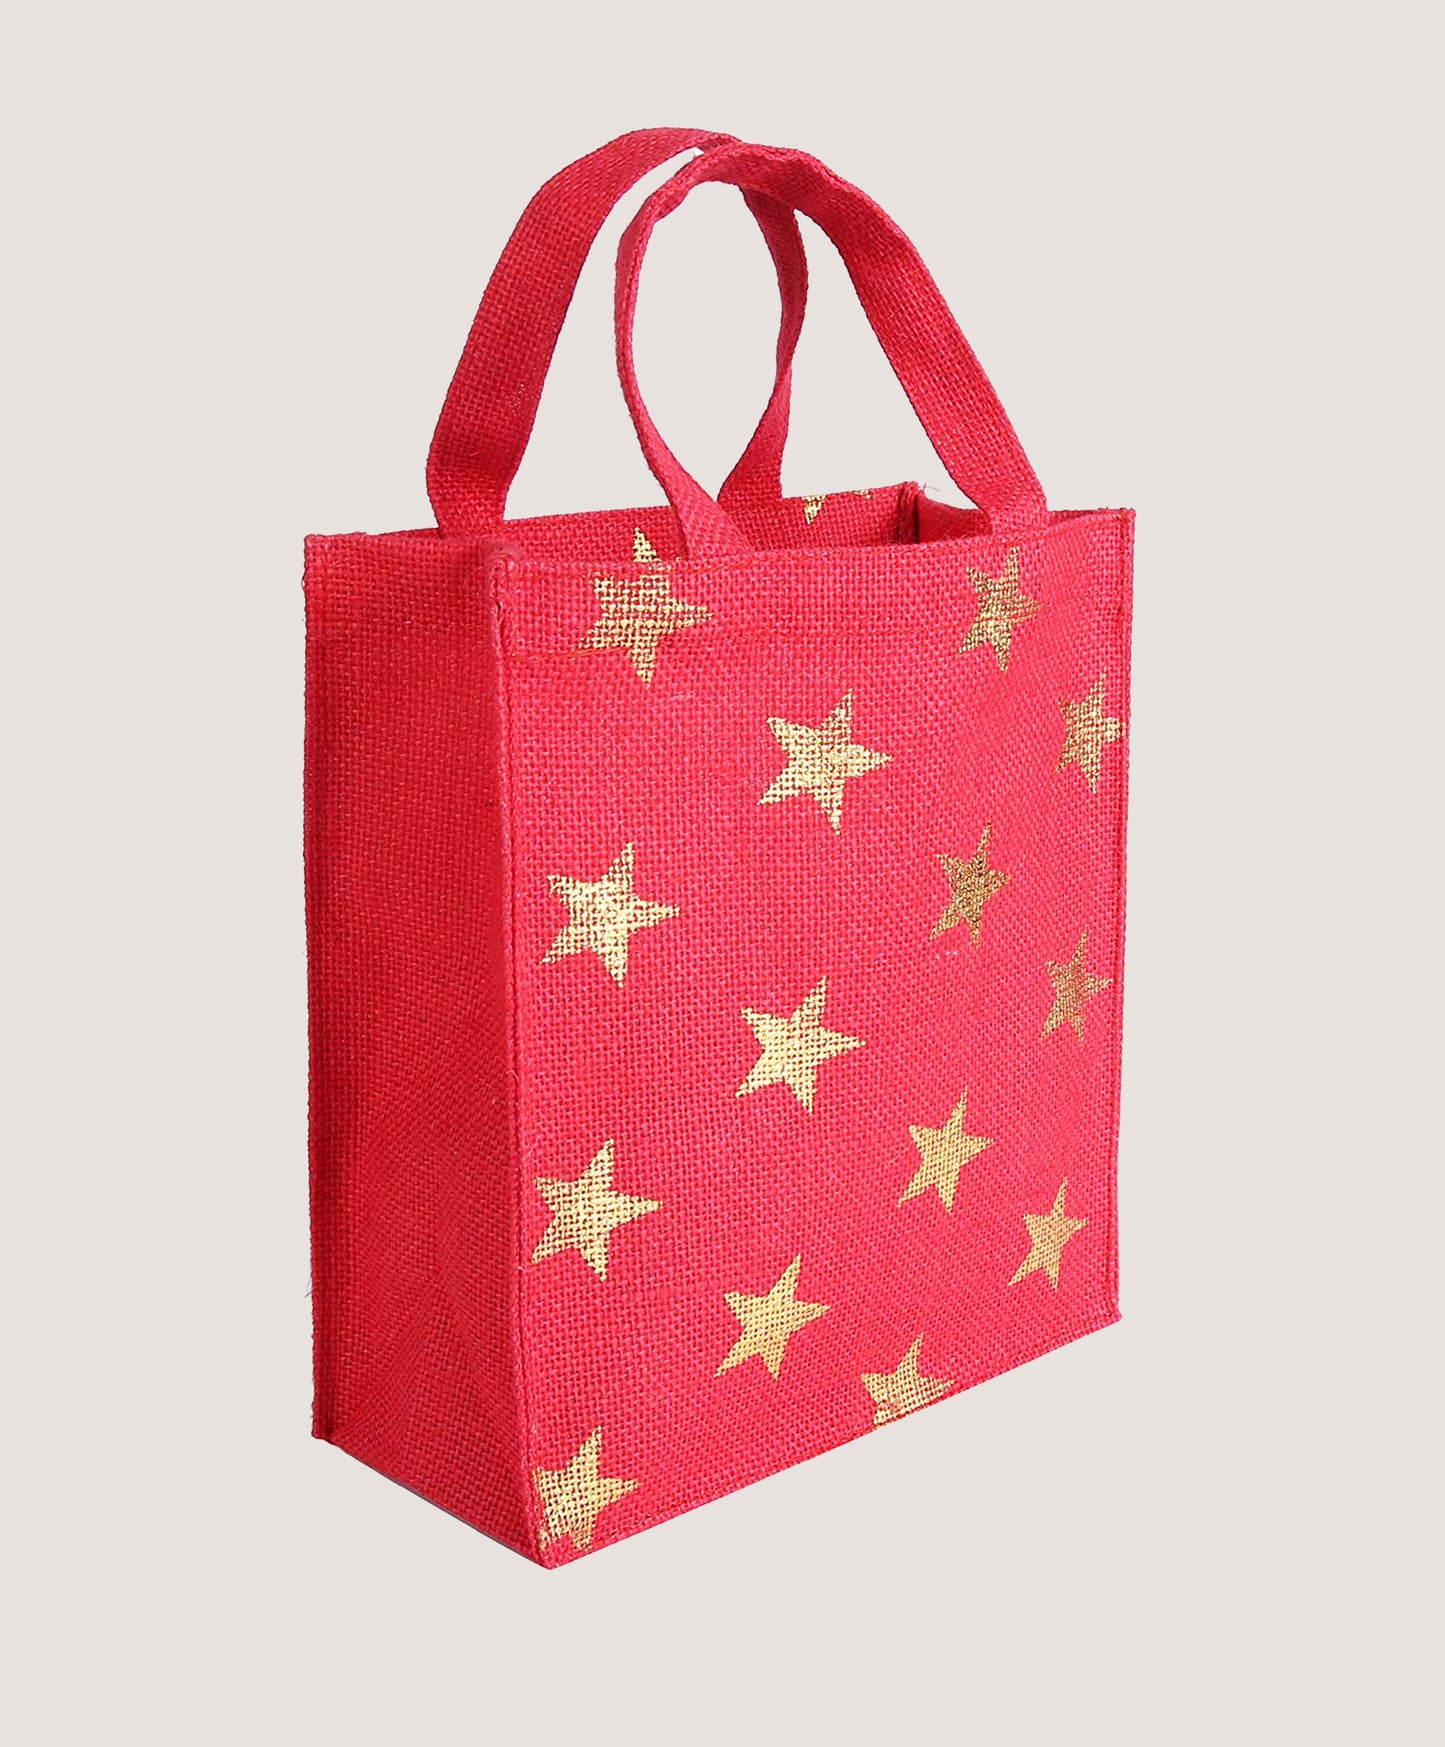 EARTHBAGS GOLD STAR JUTE GIFT BAG (PACK OF 2) - RED & BEIGE